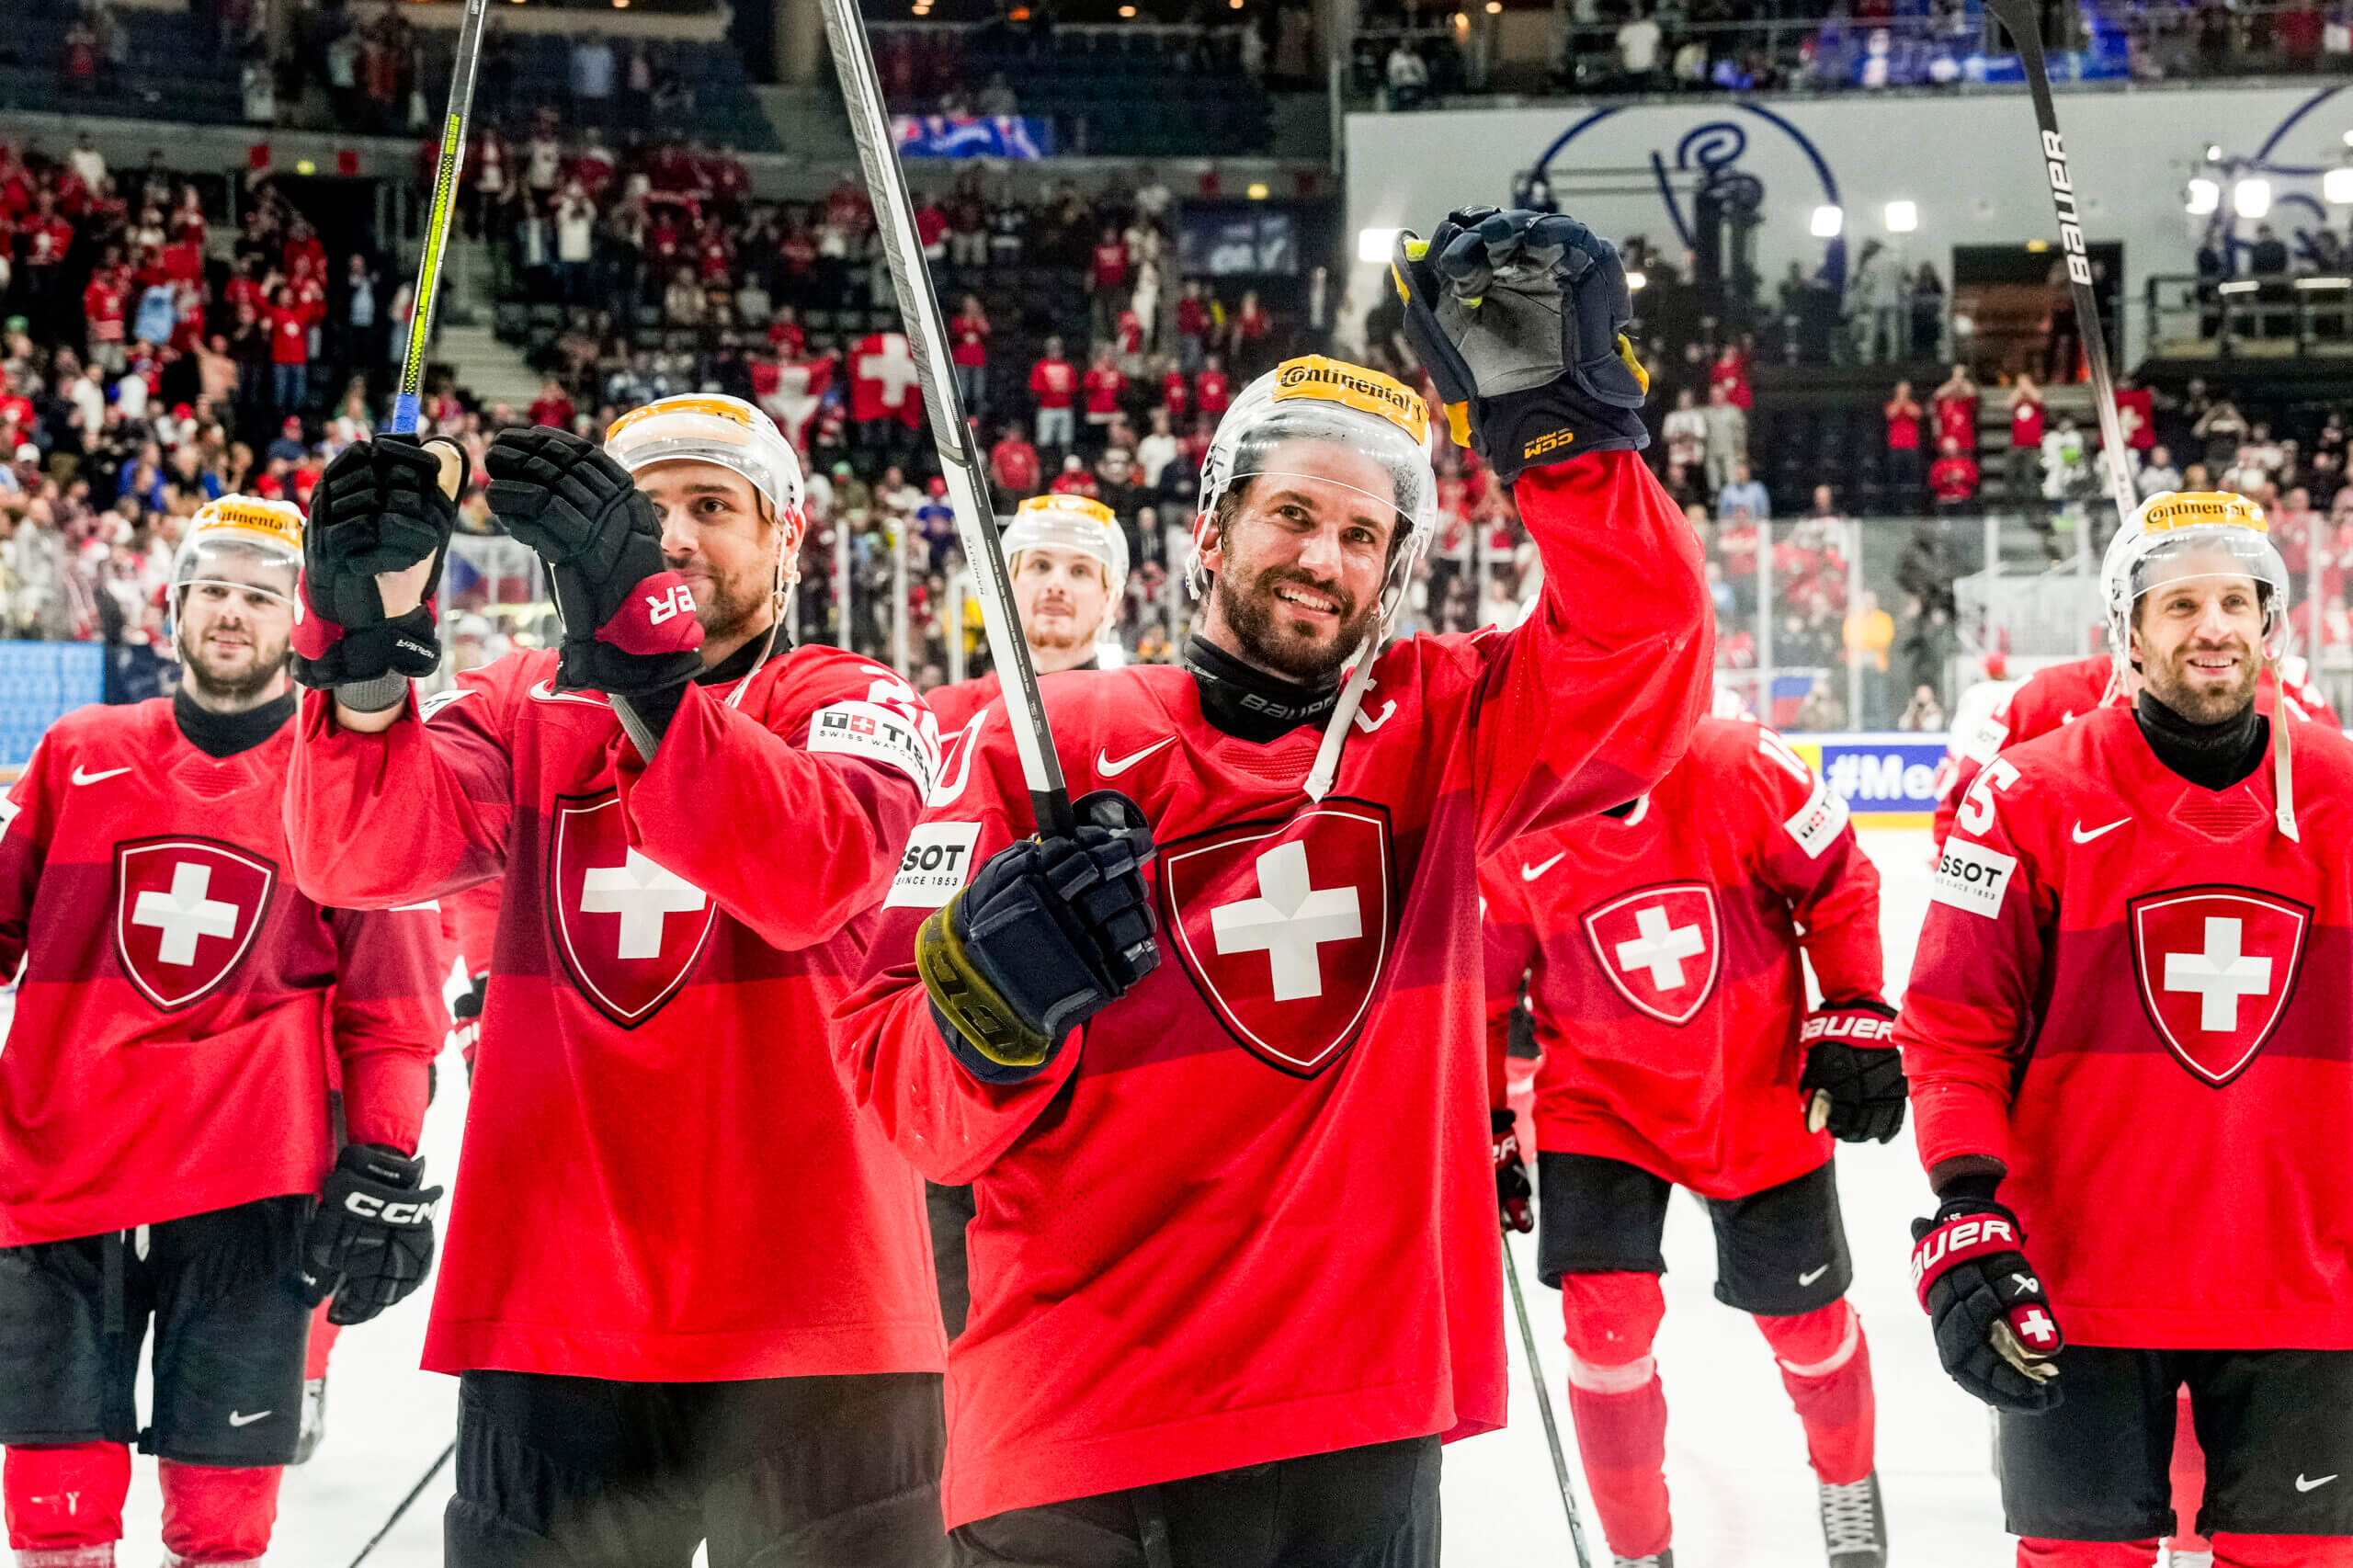 'We have a problem': Inside the battle threatening Switzerland's hockey future